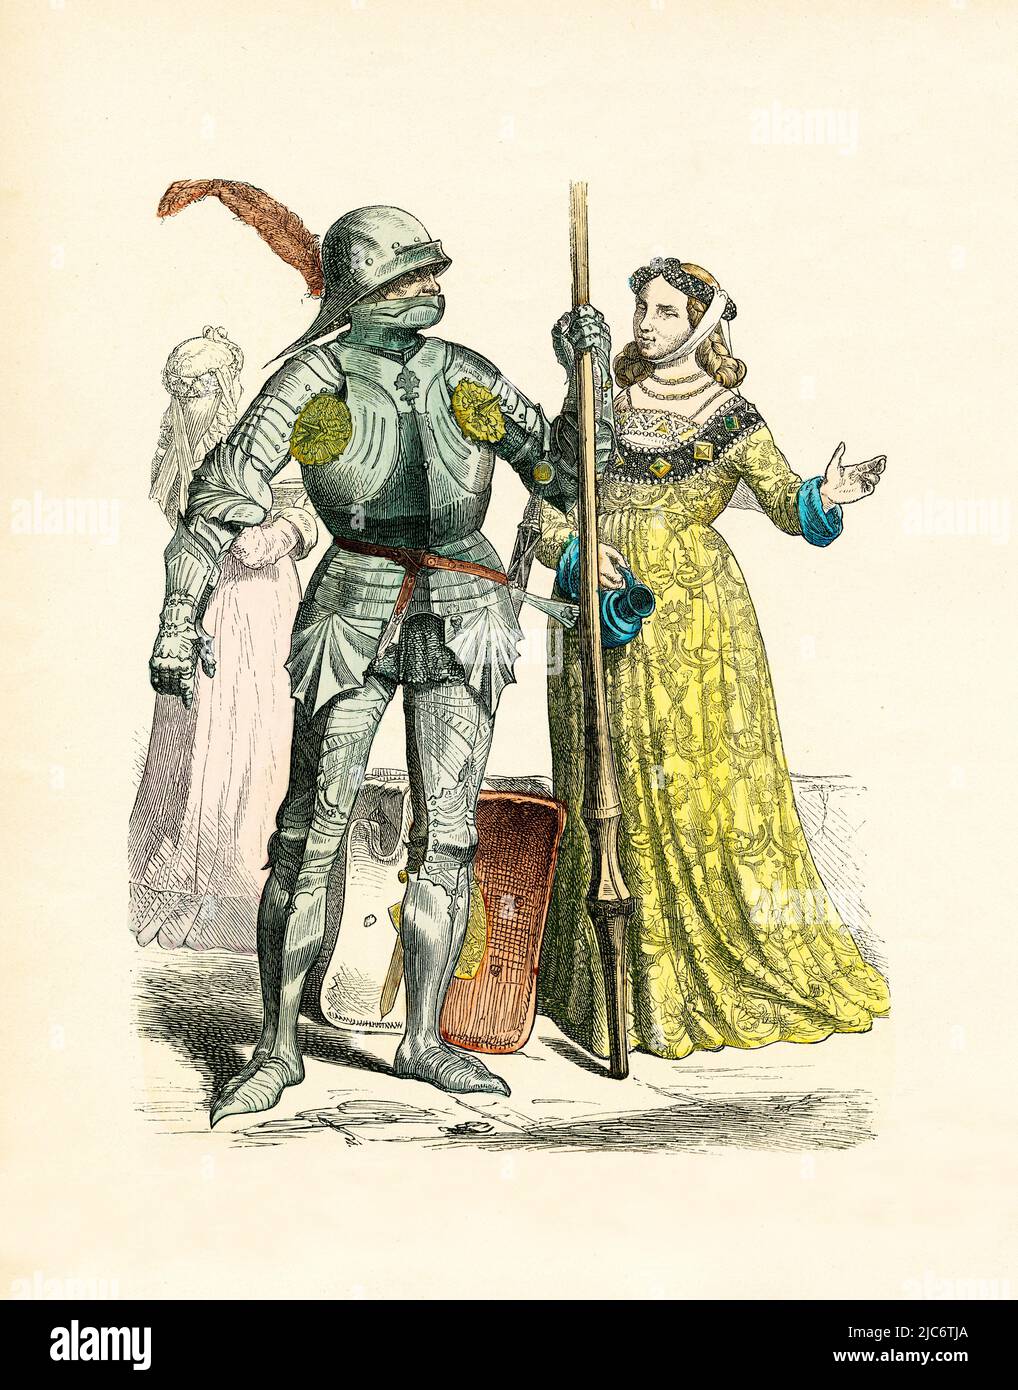 German Knight and Noblewoman, mid-15th Century, Illustration, The History of Costume, Braun & Schneider, Munich, Germany, 1861-1880 Stock Photo